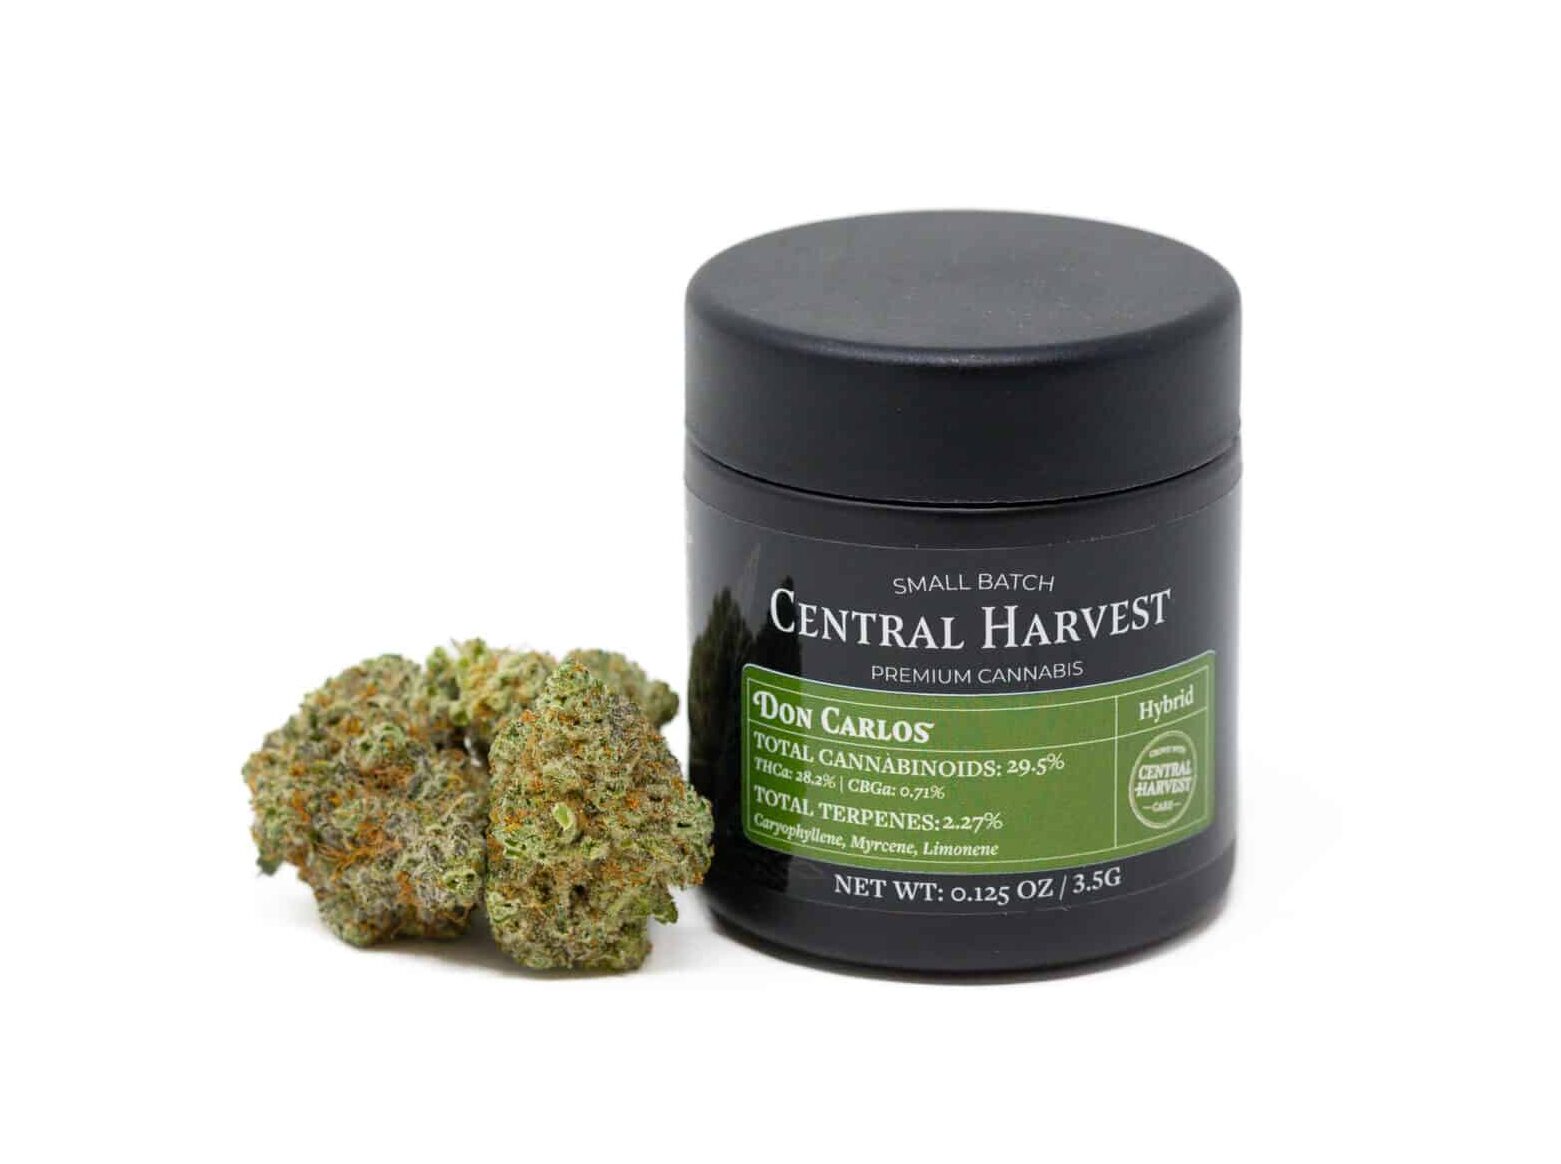 Don Carlos is a Hybrid Cannabis strain grown by Central Harvest